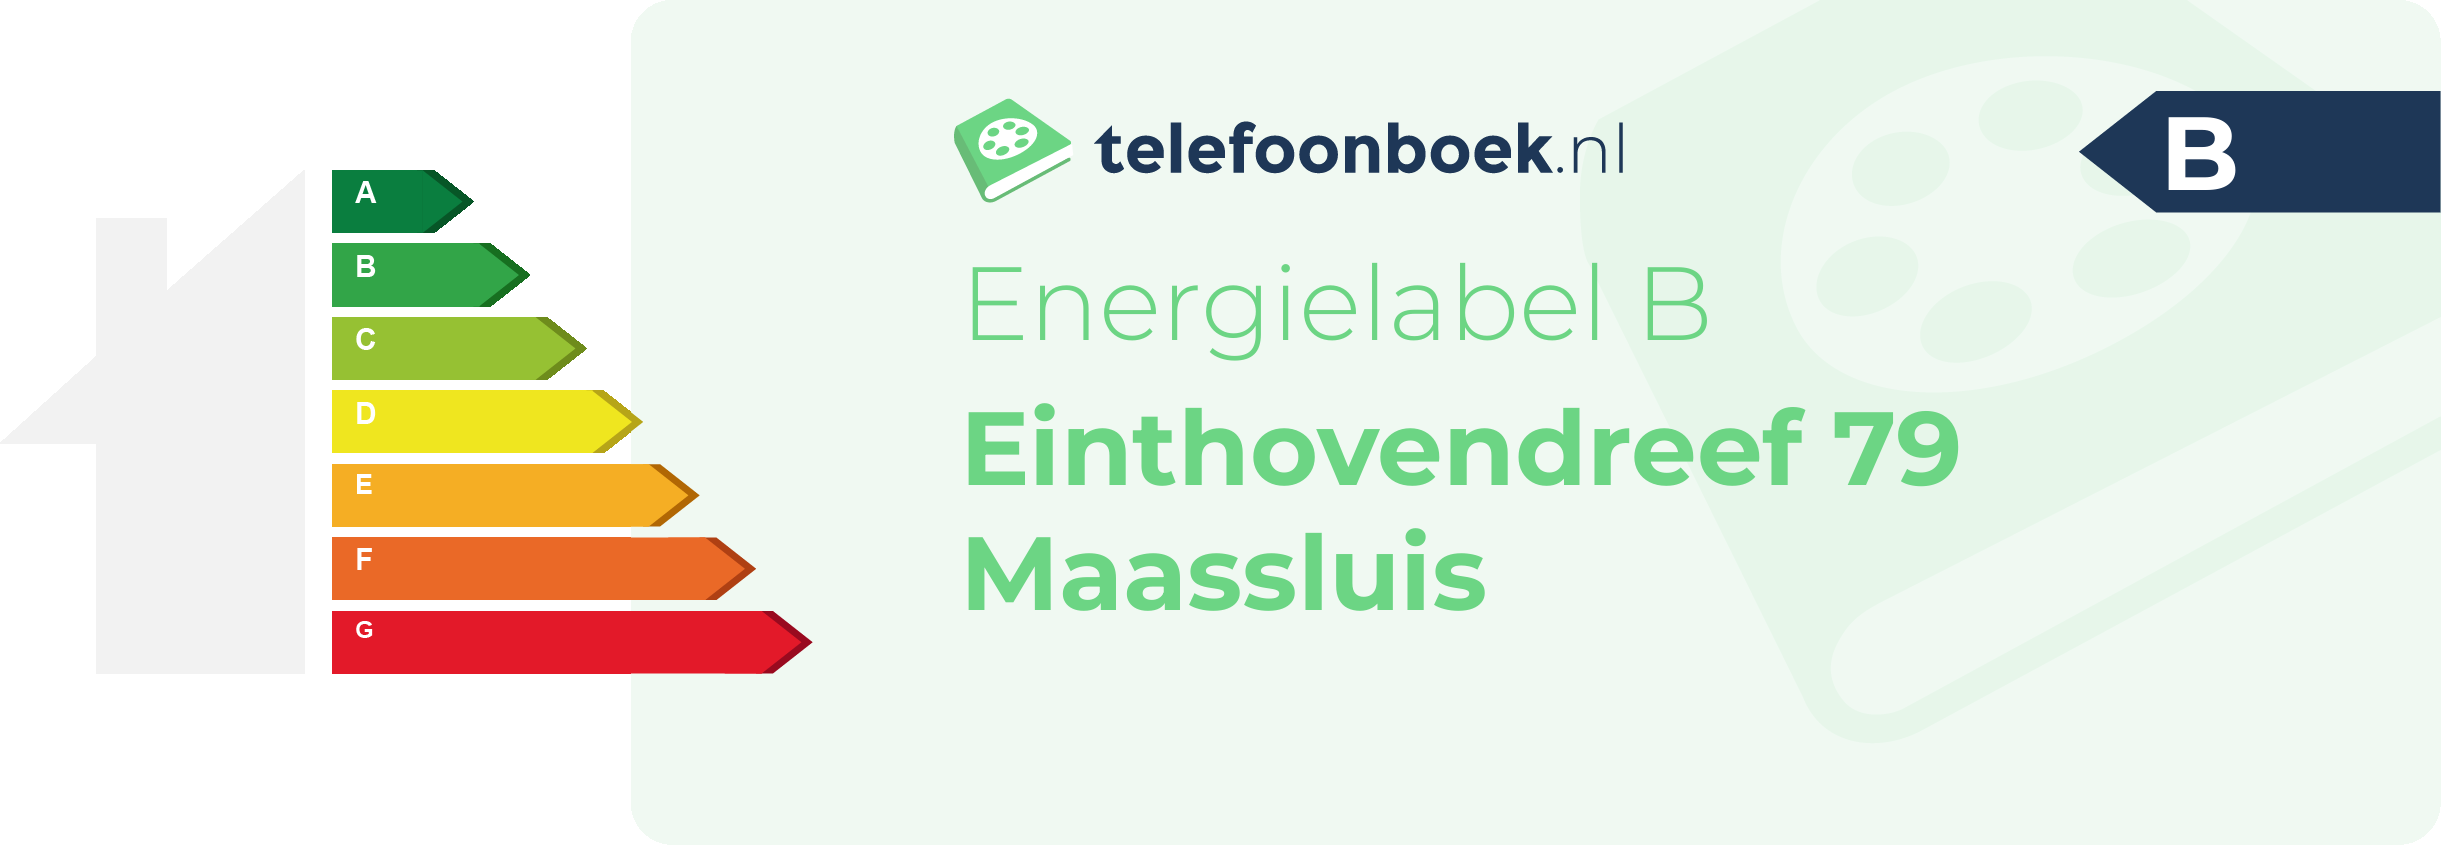 Energielabel Einthovendreef 79 Maassluis